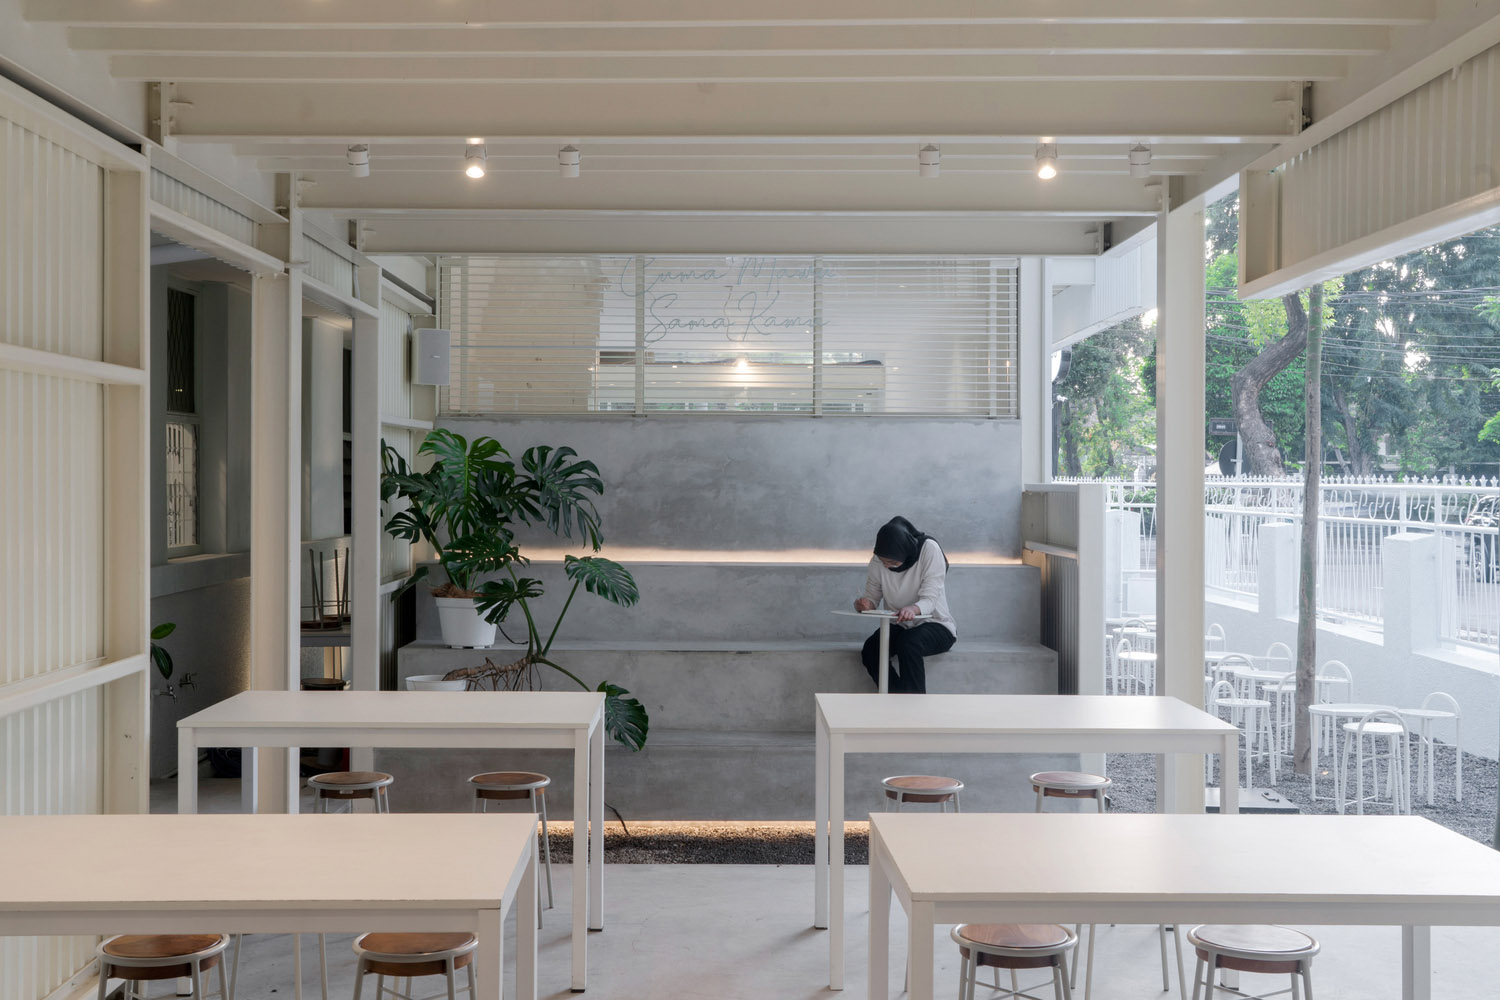 ANTI,咖啡廳設計案例,咖啡店設計,印尼,MAWU 咖啡廳,辦公室設計,咖啡廳設計,咖啡店設計案例,創意咖啡店